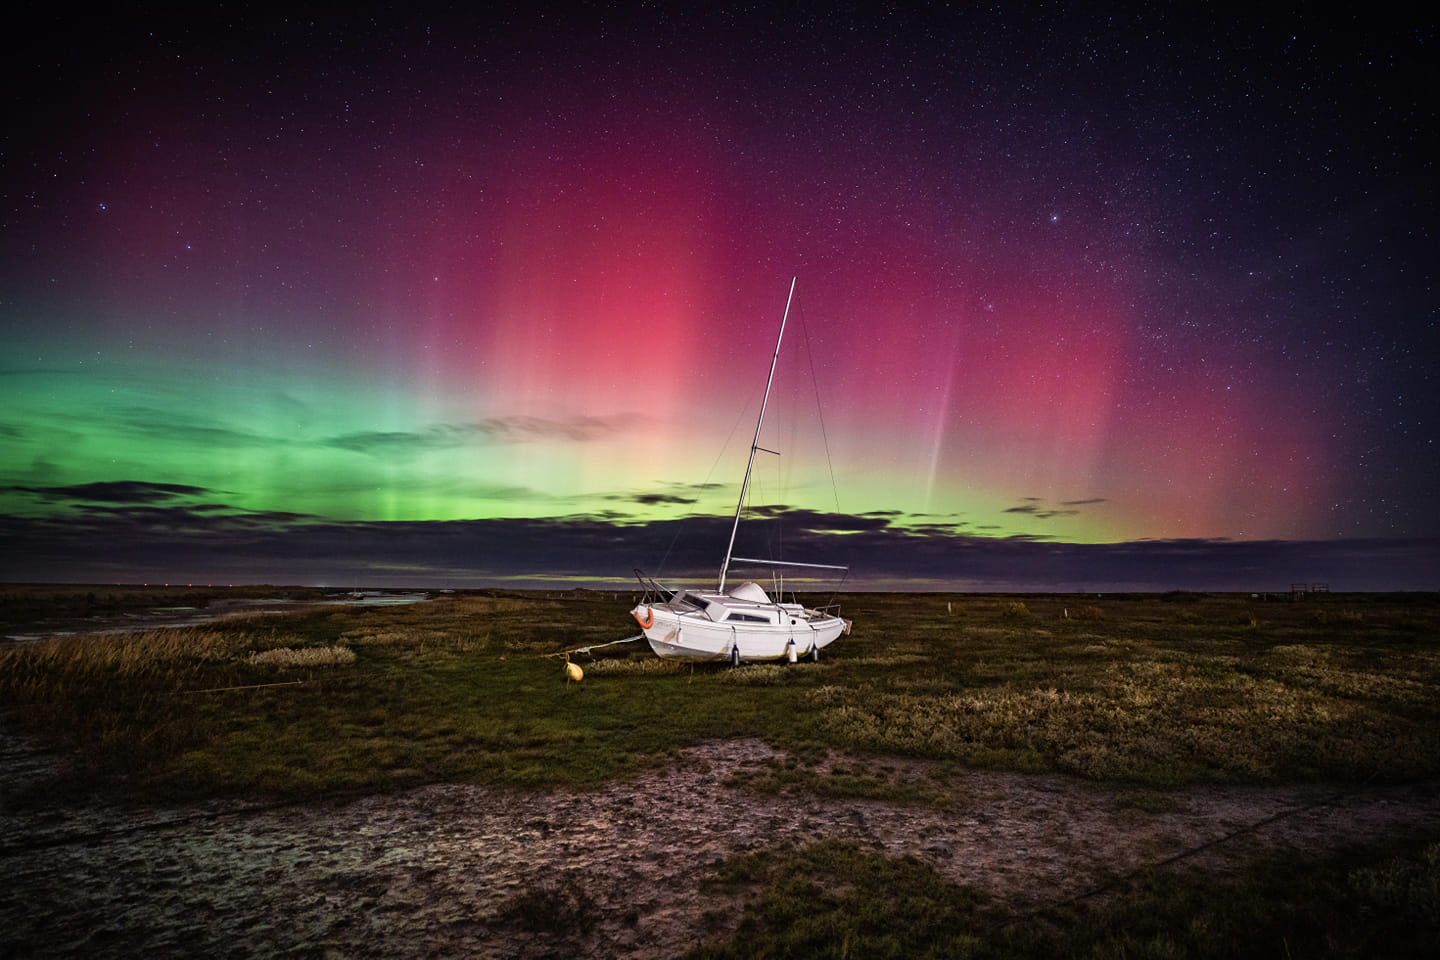 Aurora borealis: Spectacular Northern Lights display across